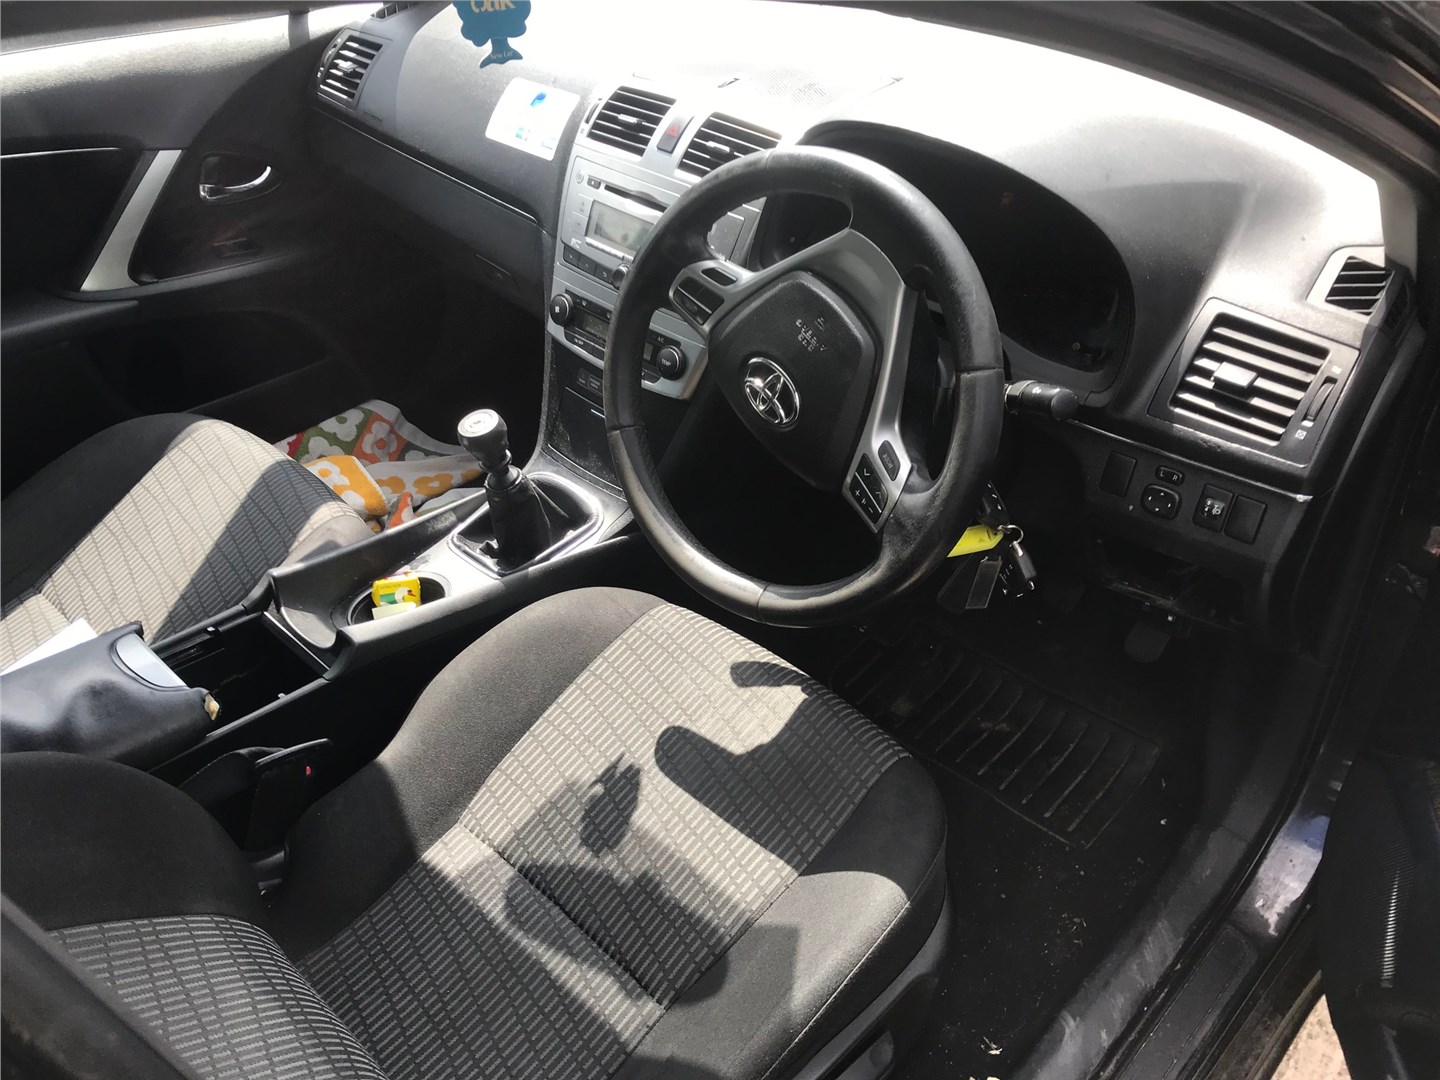 e034501 Замок ремня безопасности перед. правая Toyota Avensis 3 2009-2015 2014